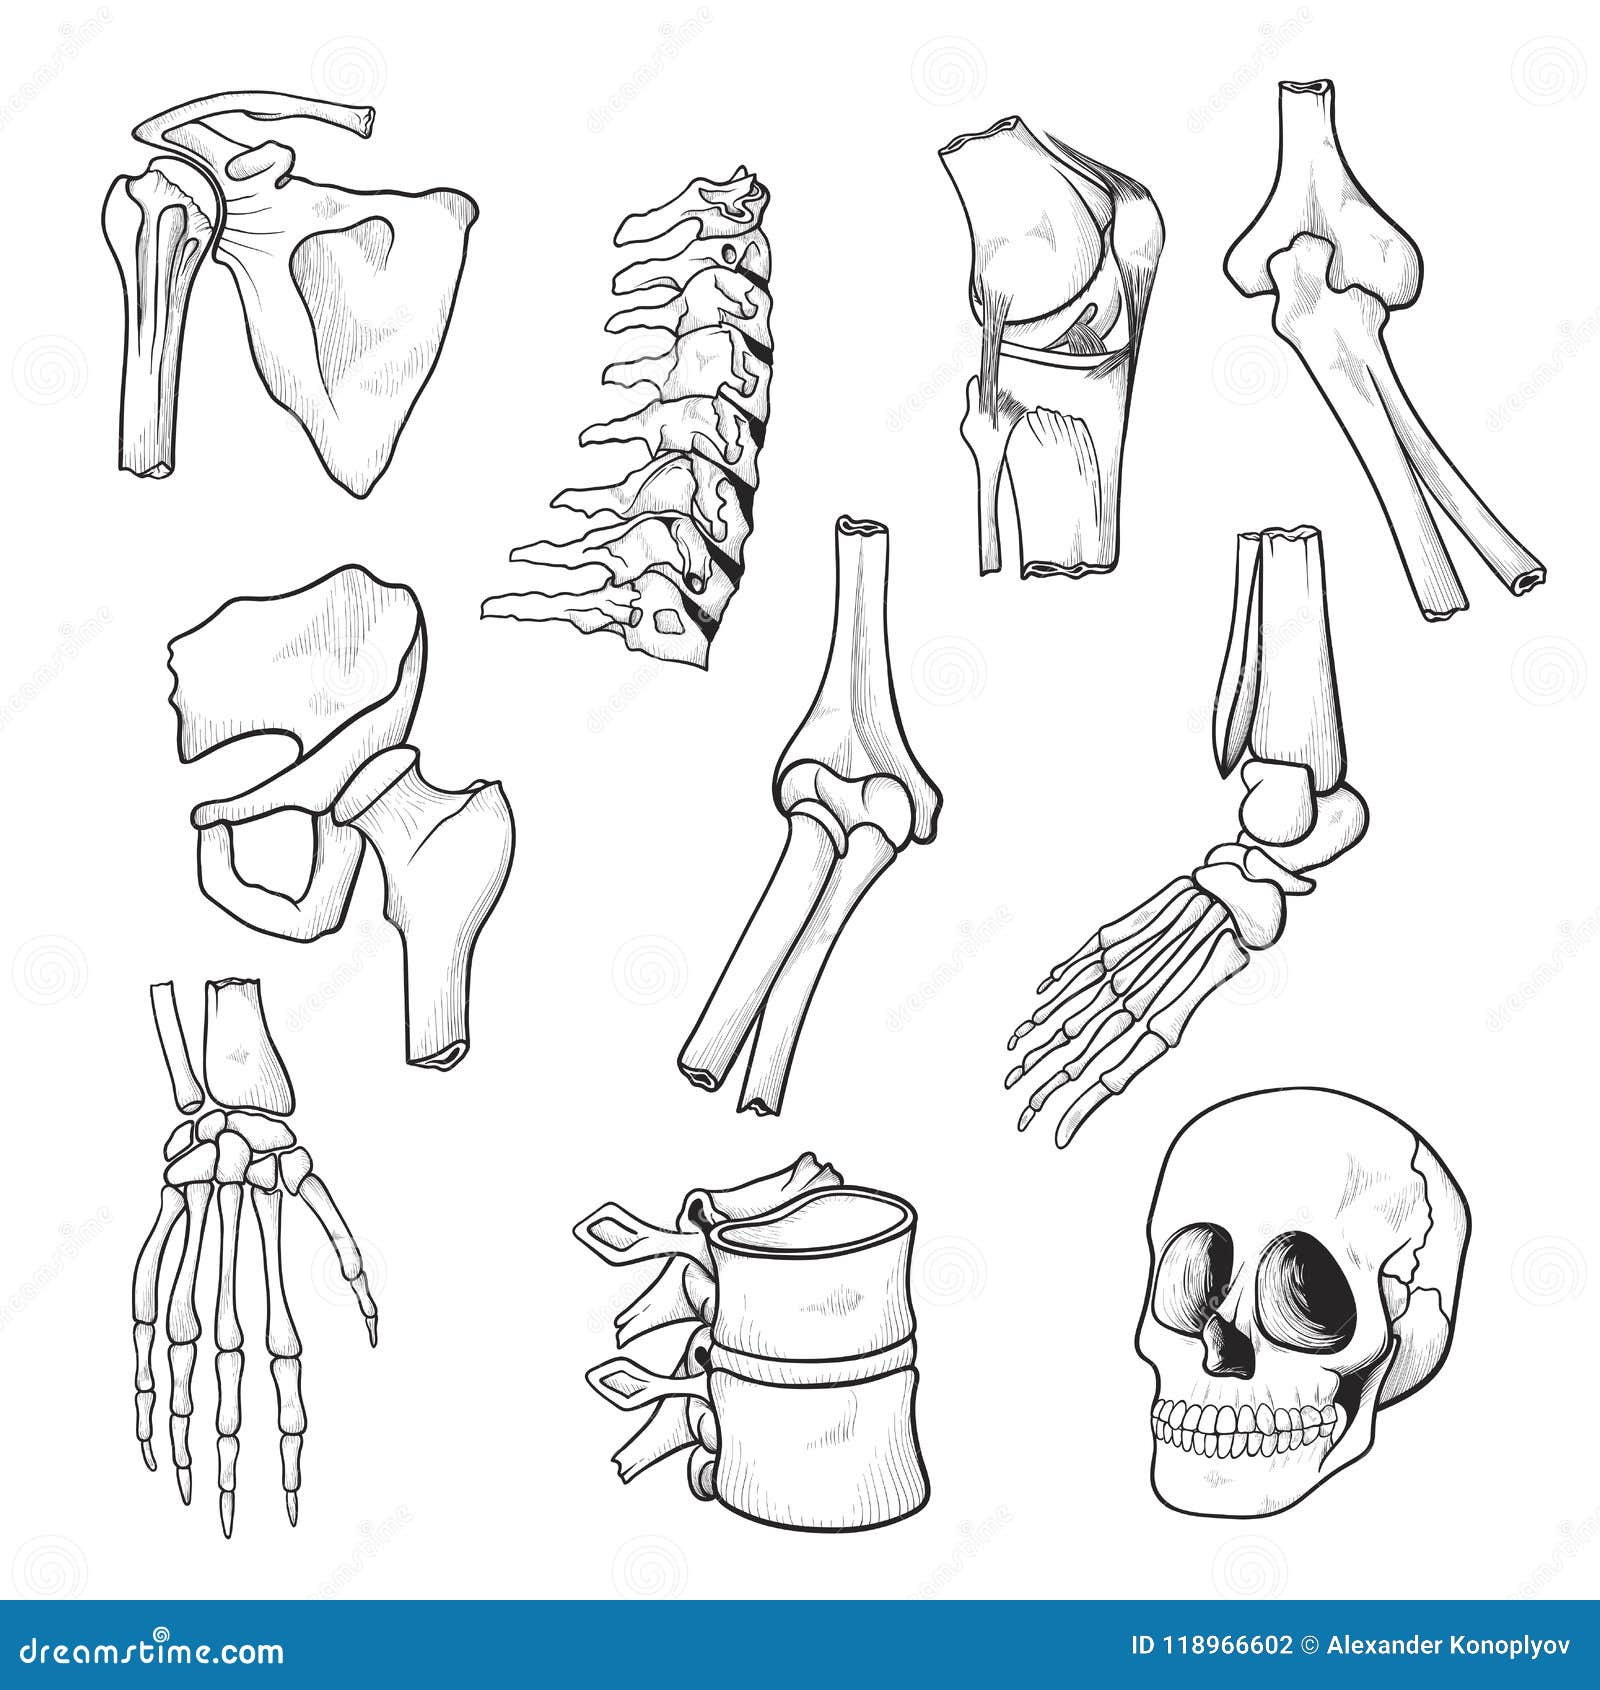 Bone and joint sketches set for medicine design Vector Image